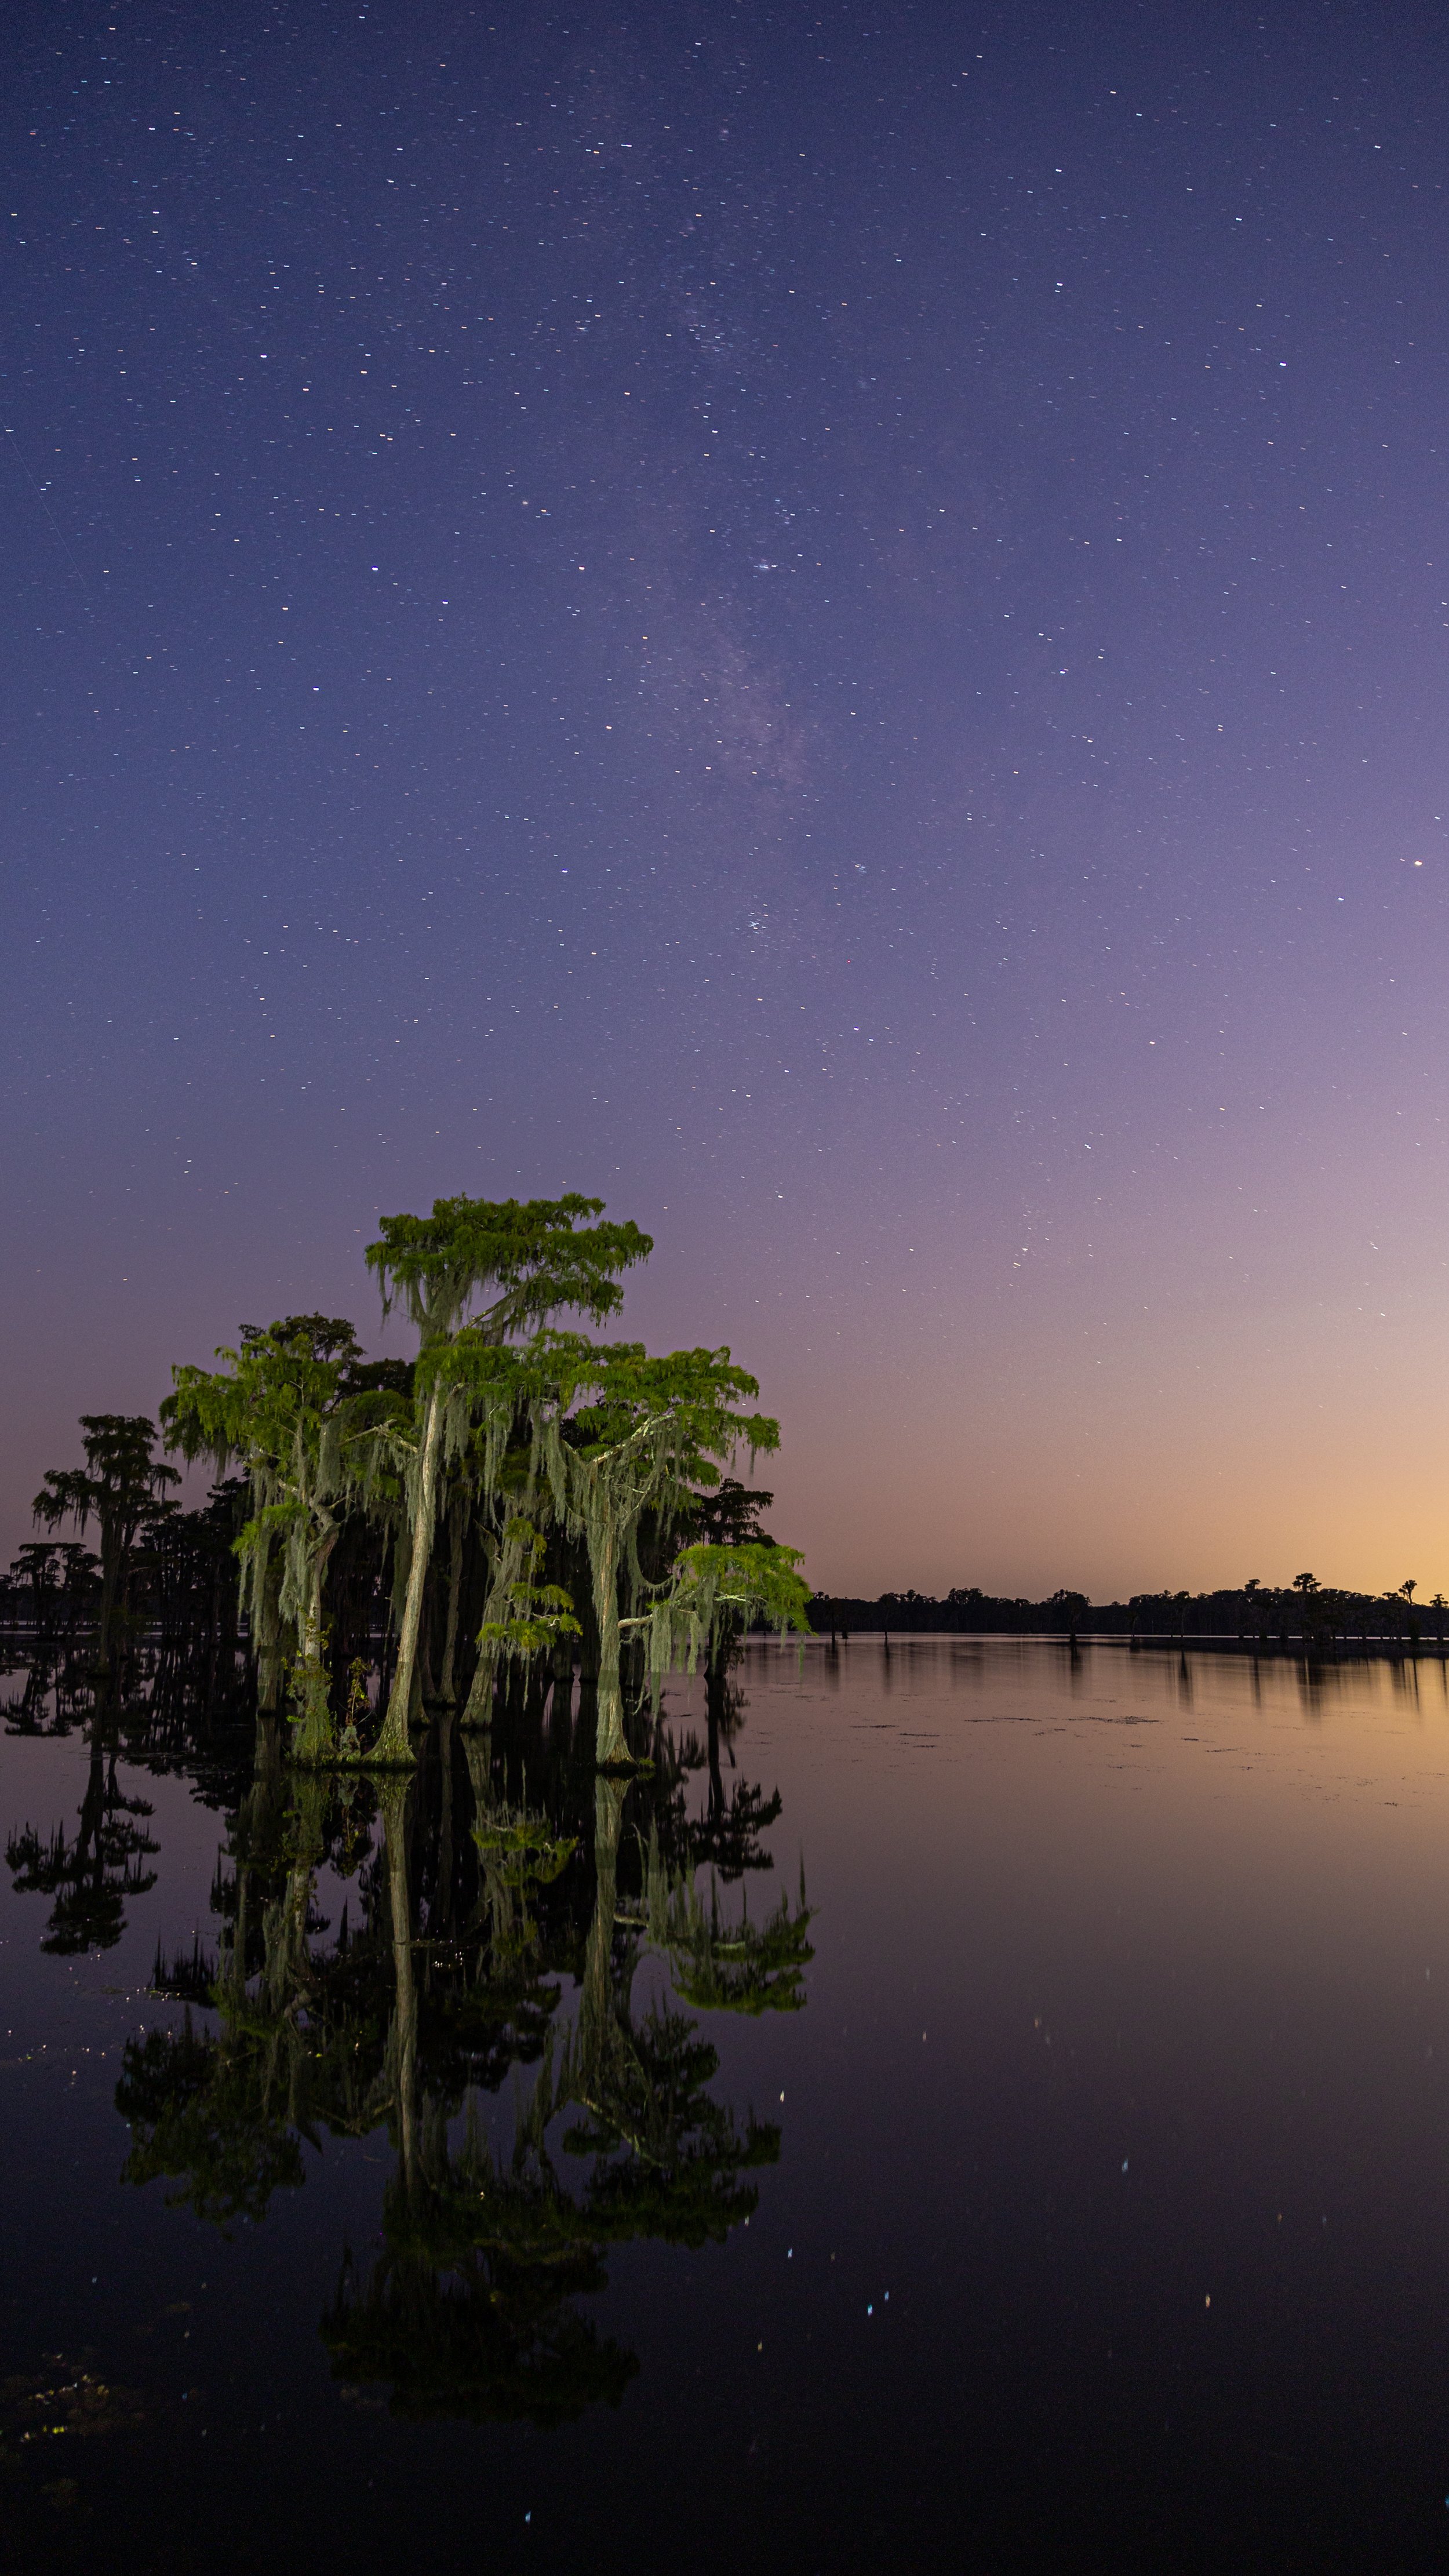 stargazing-milky-way-banks-lake-wildlife-refuge-cypress-trees-evening-night-long-exposure-photography.jpg